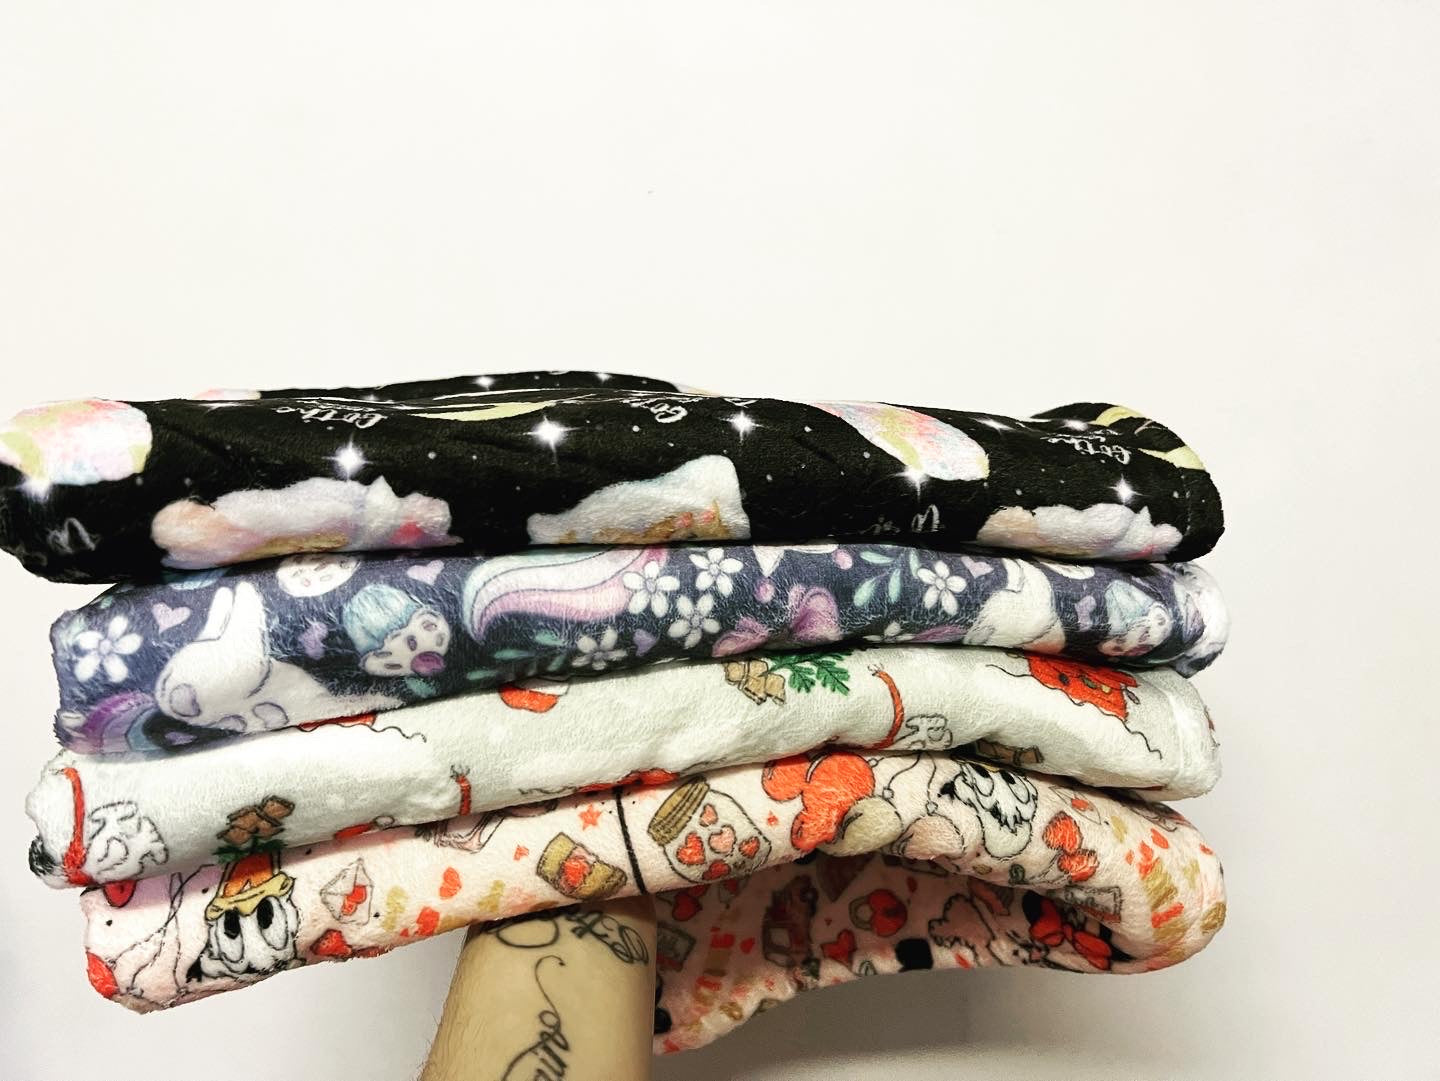 Collections – The Custom Fabric Slayer Imaginarium